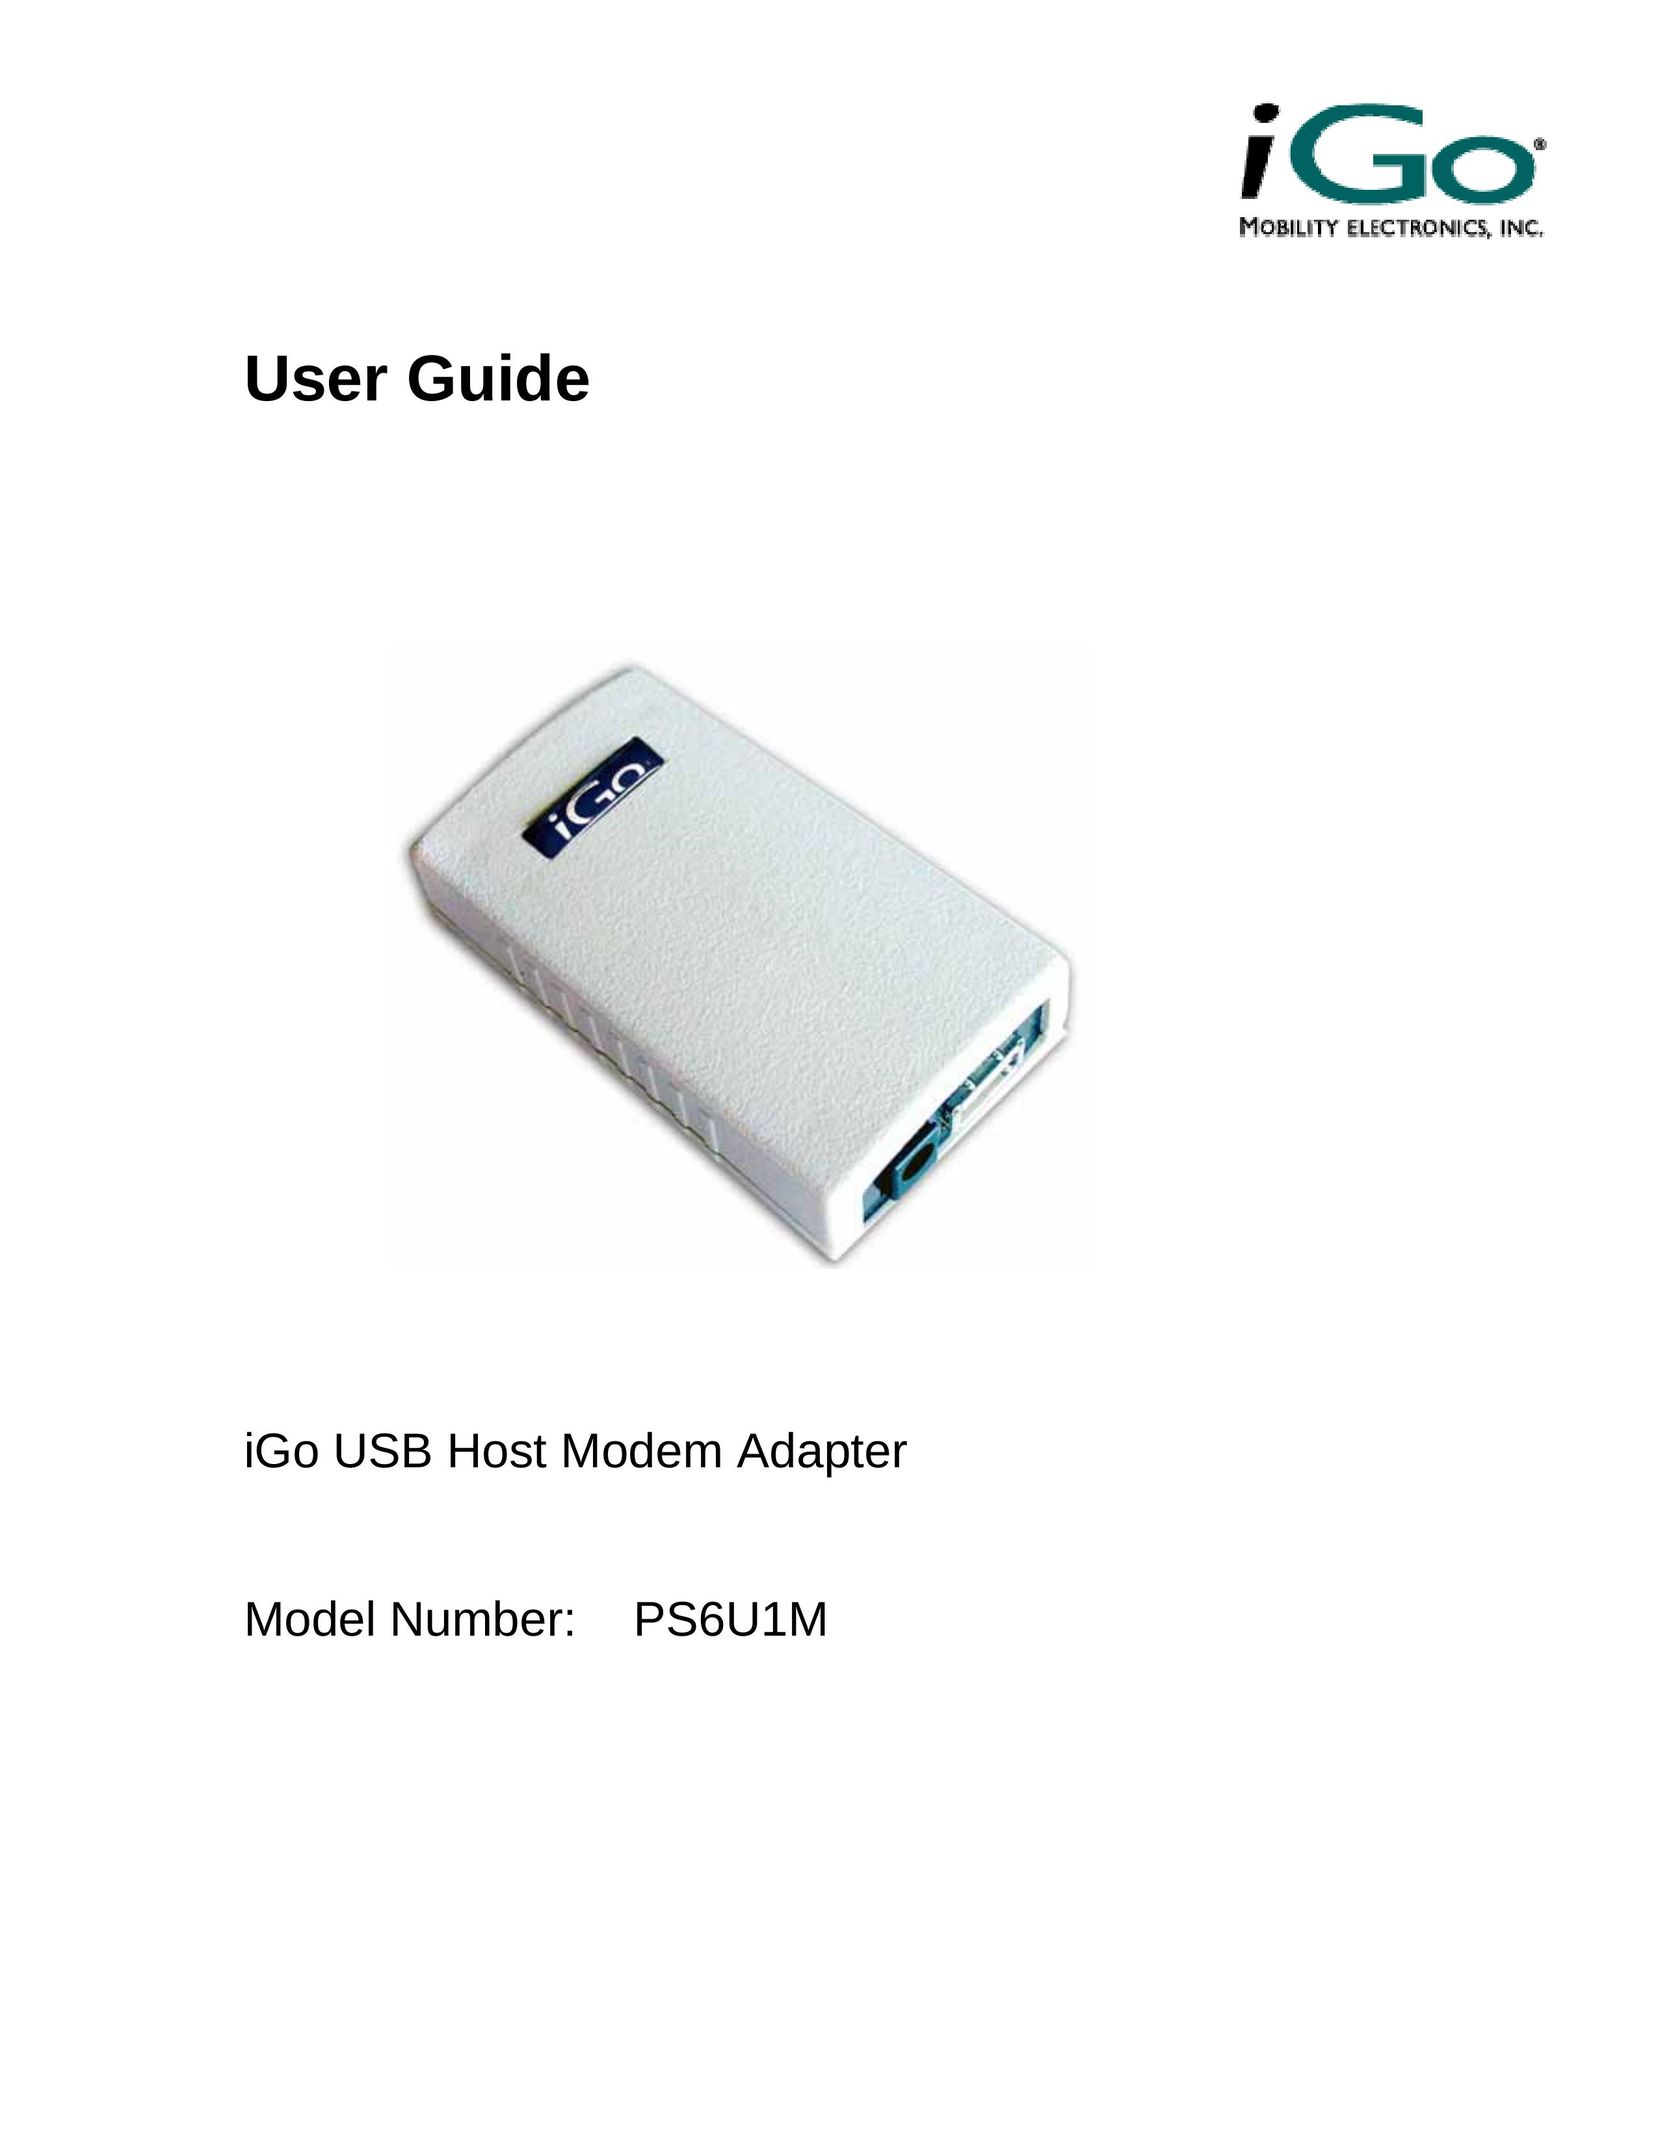 Mobility Electronics PS6U1M Network Card User Manual